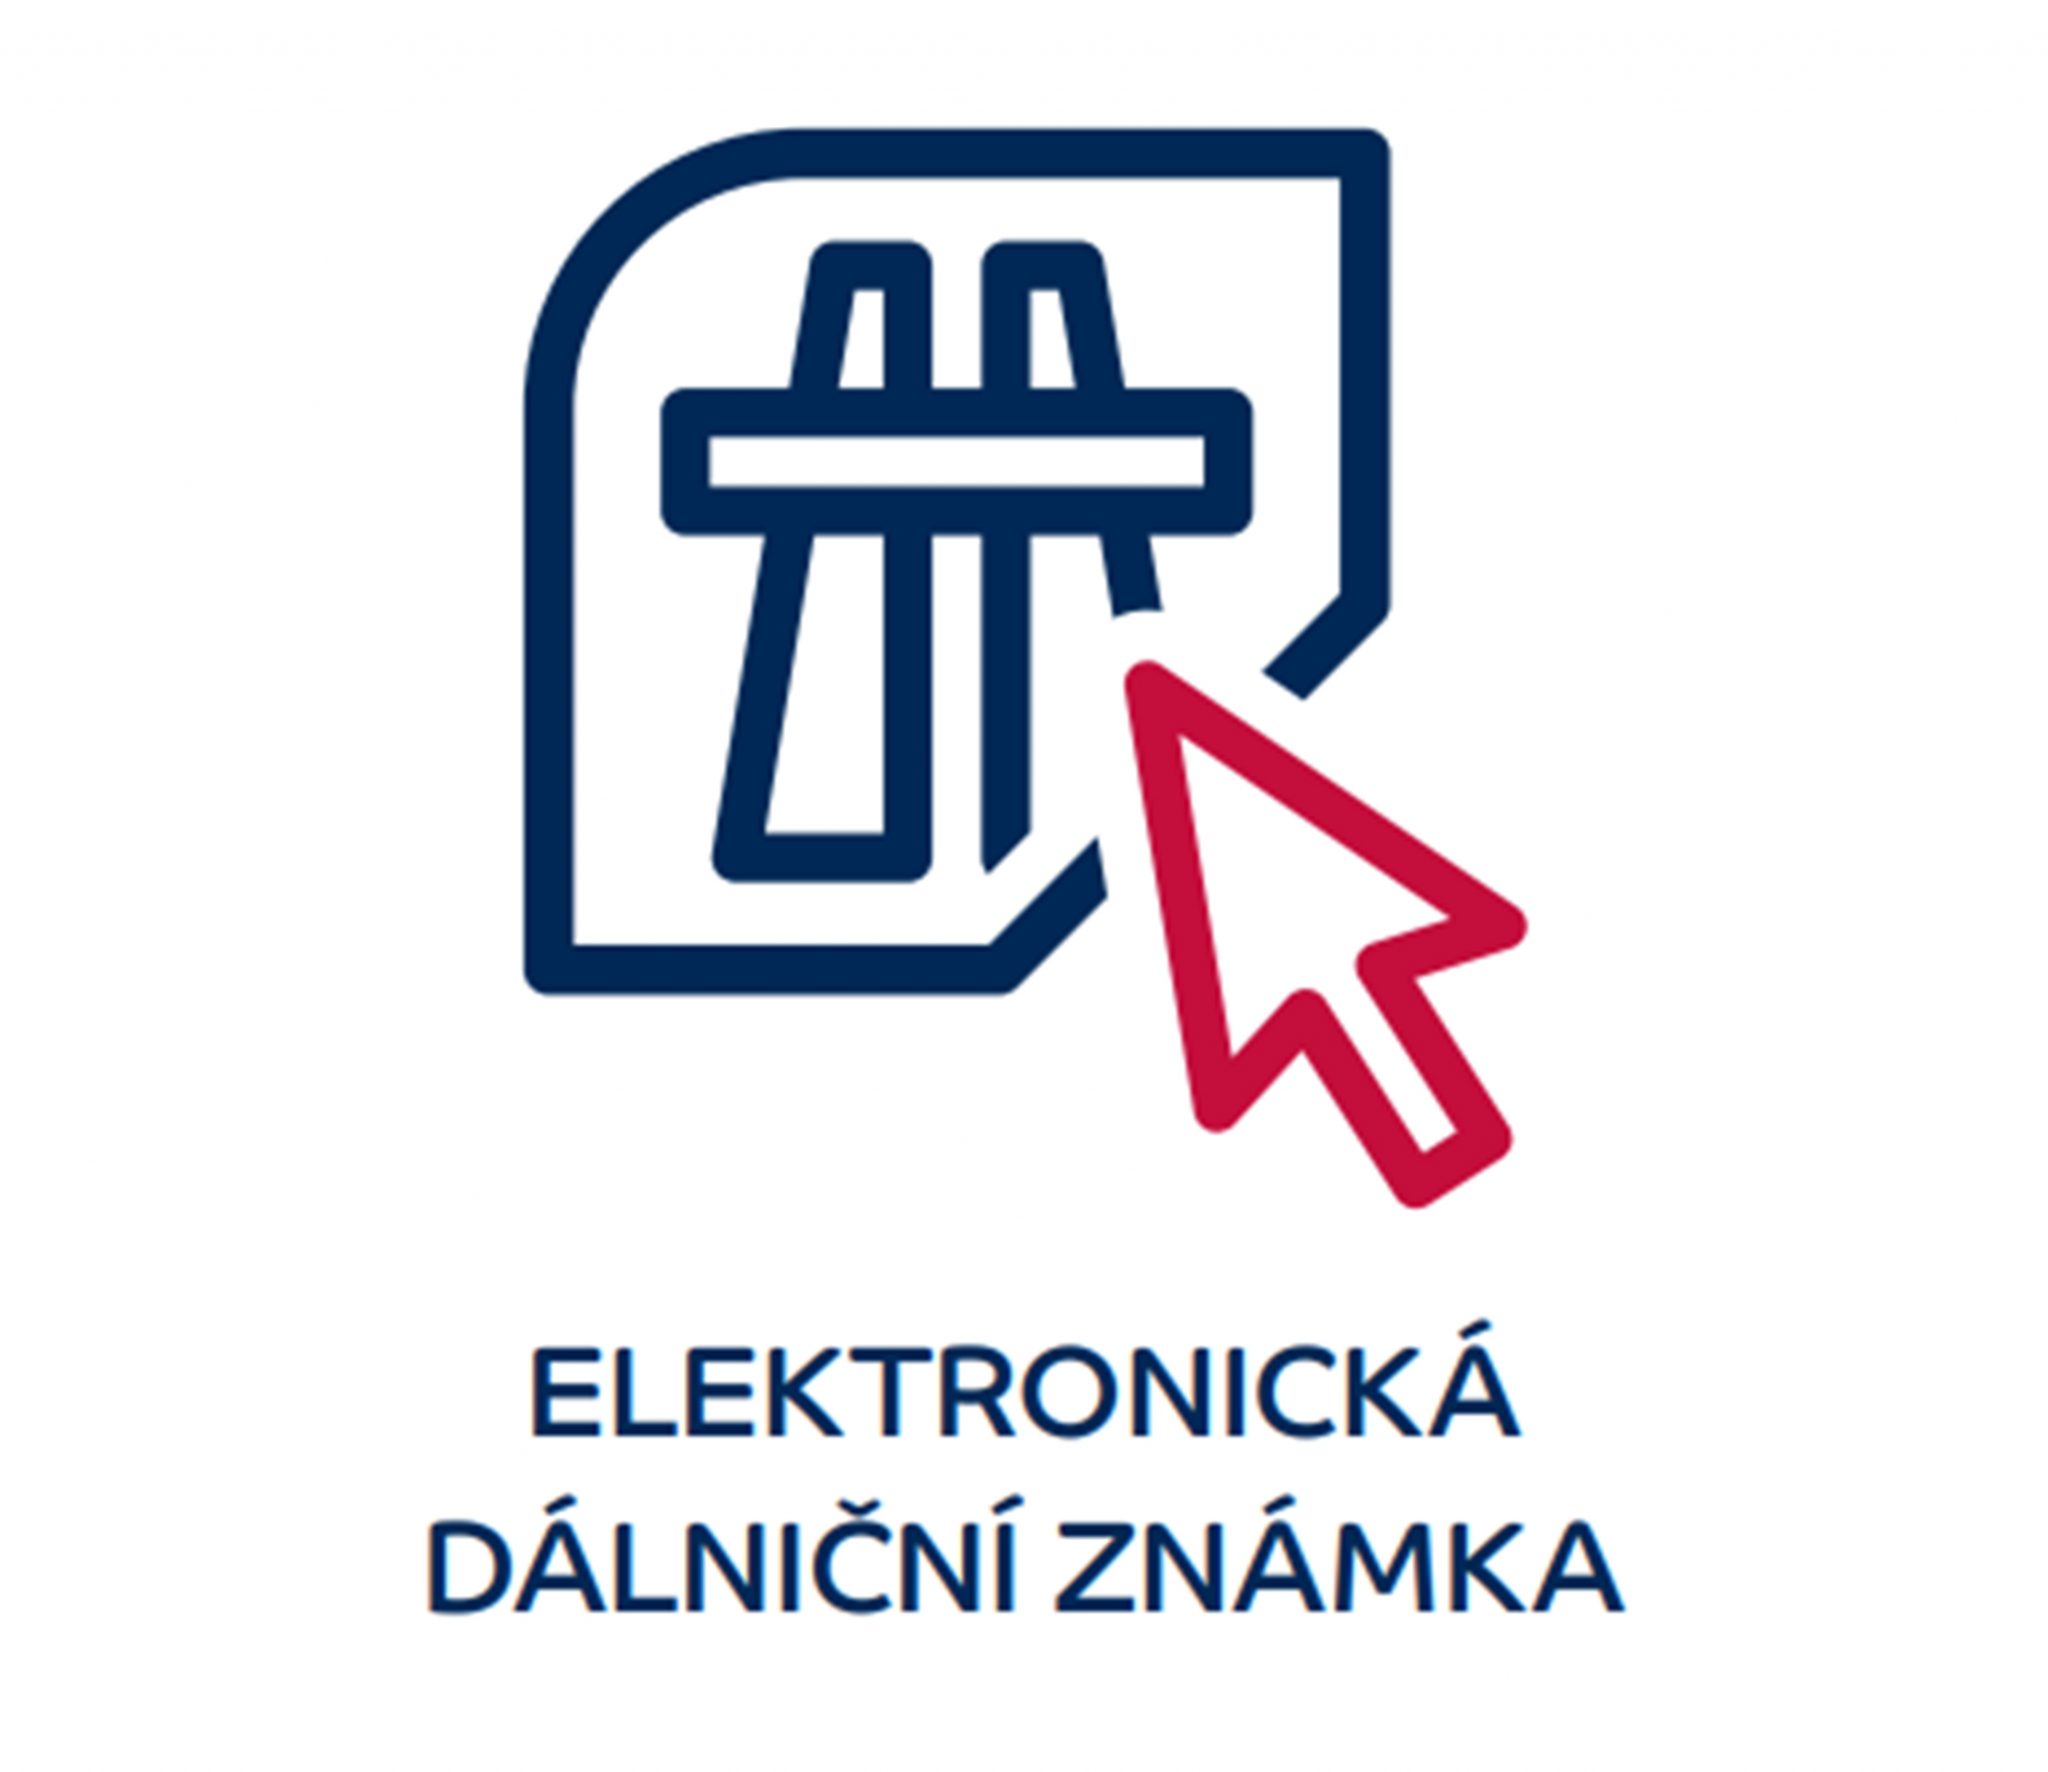 Edaz Logo Vetsi 